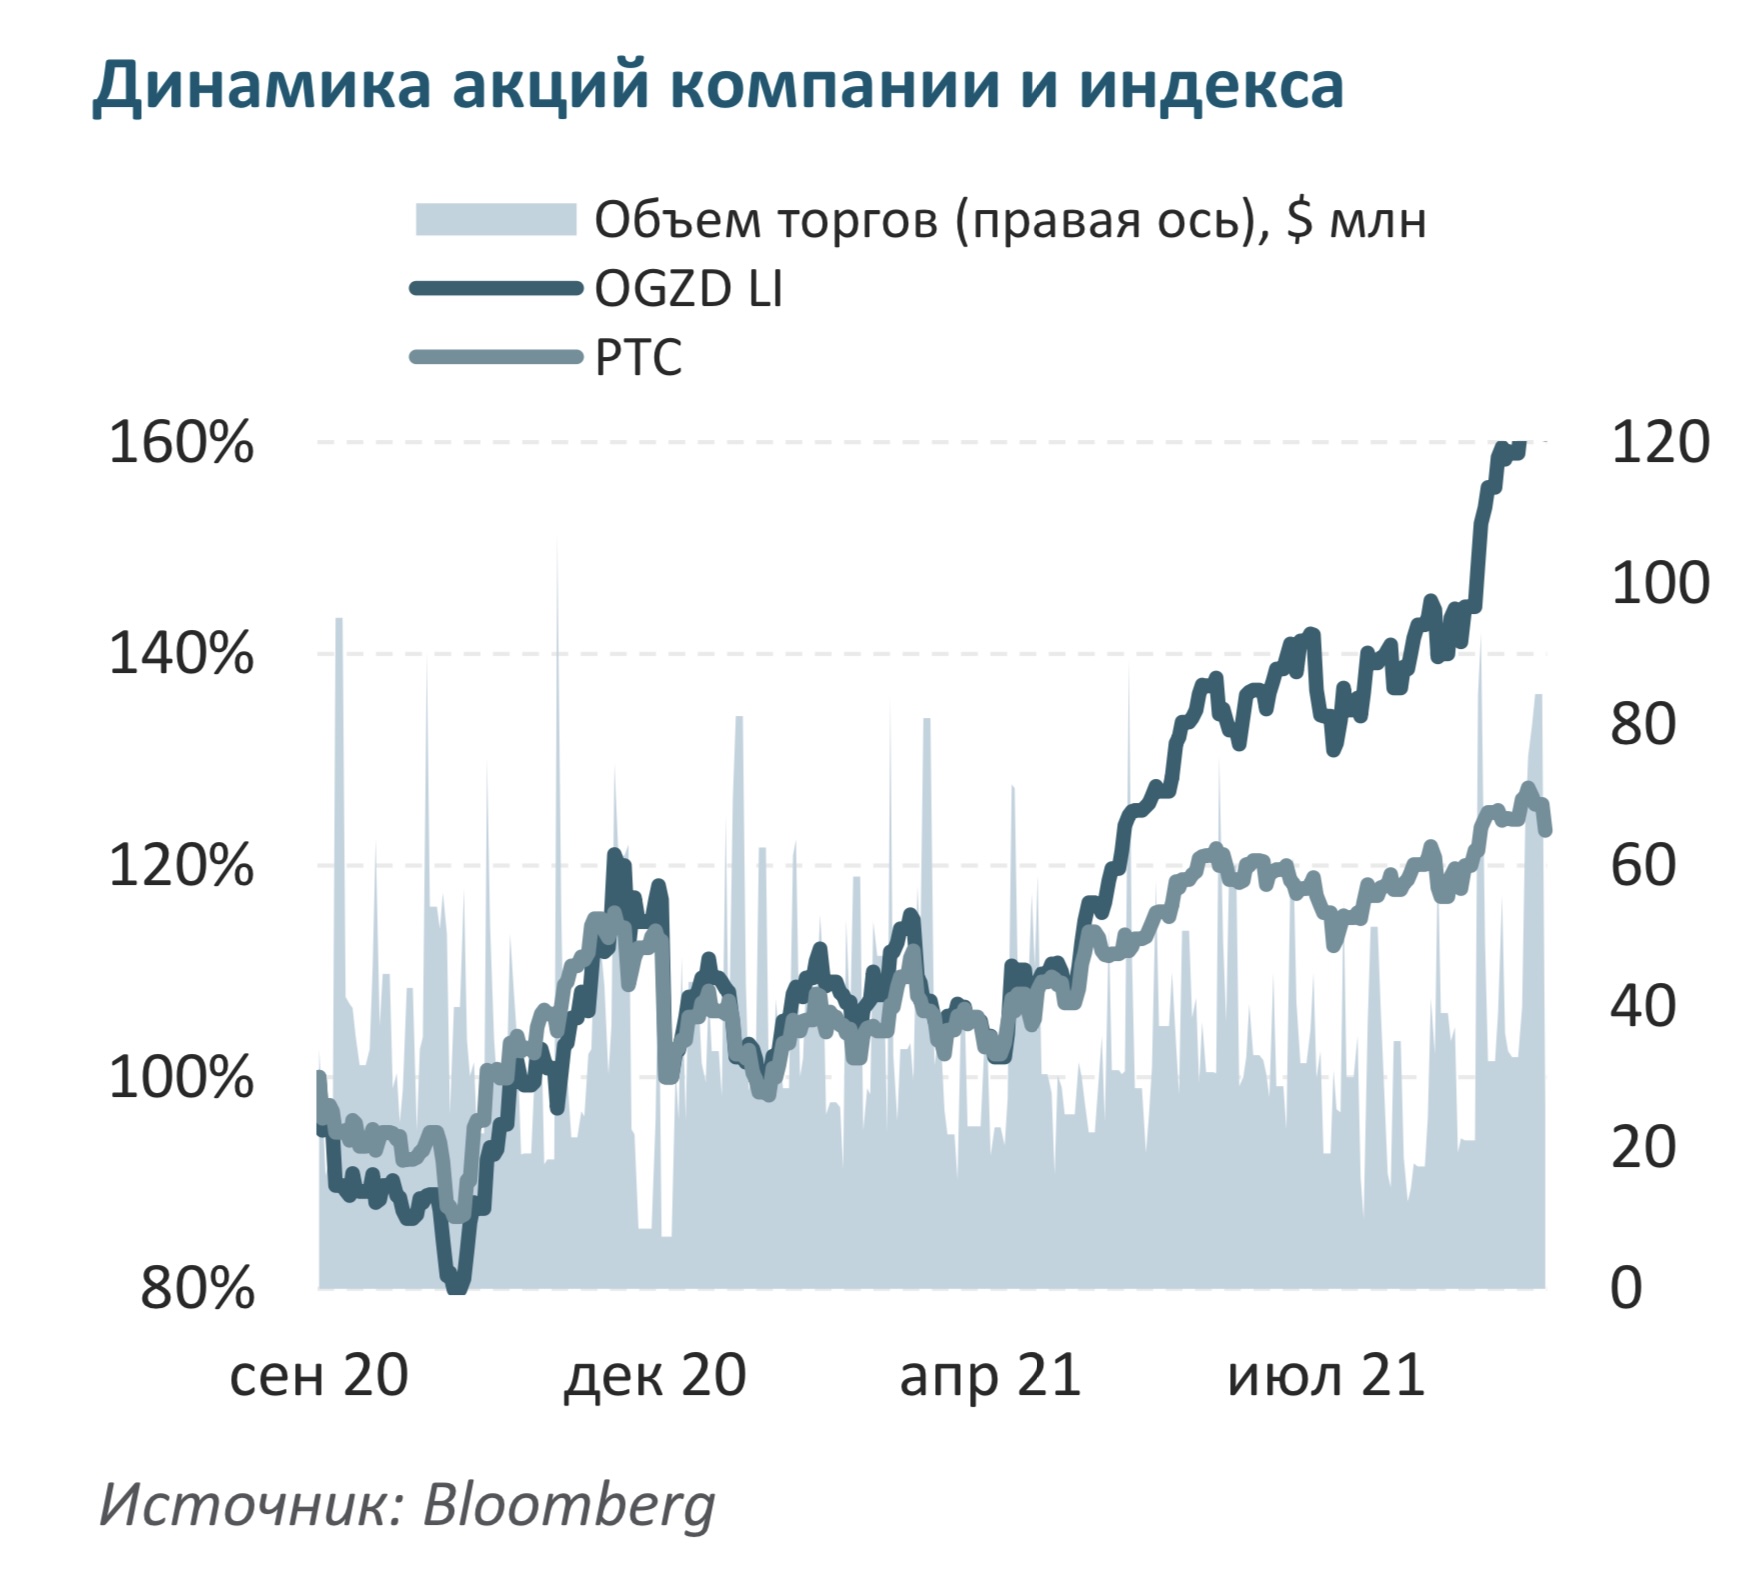 Акции Газпрома. Динамика акций Газпрома за 10 лет. Акции газпрома цена сегодня прогноз